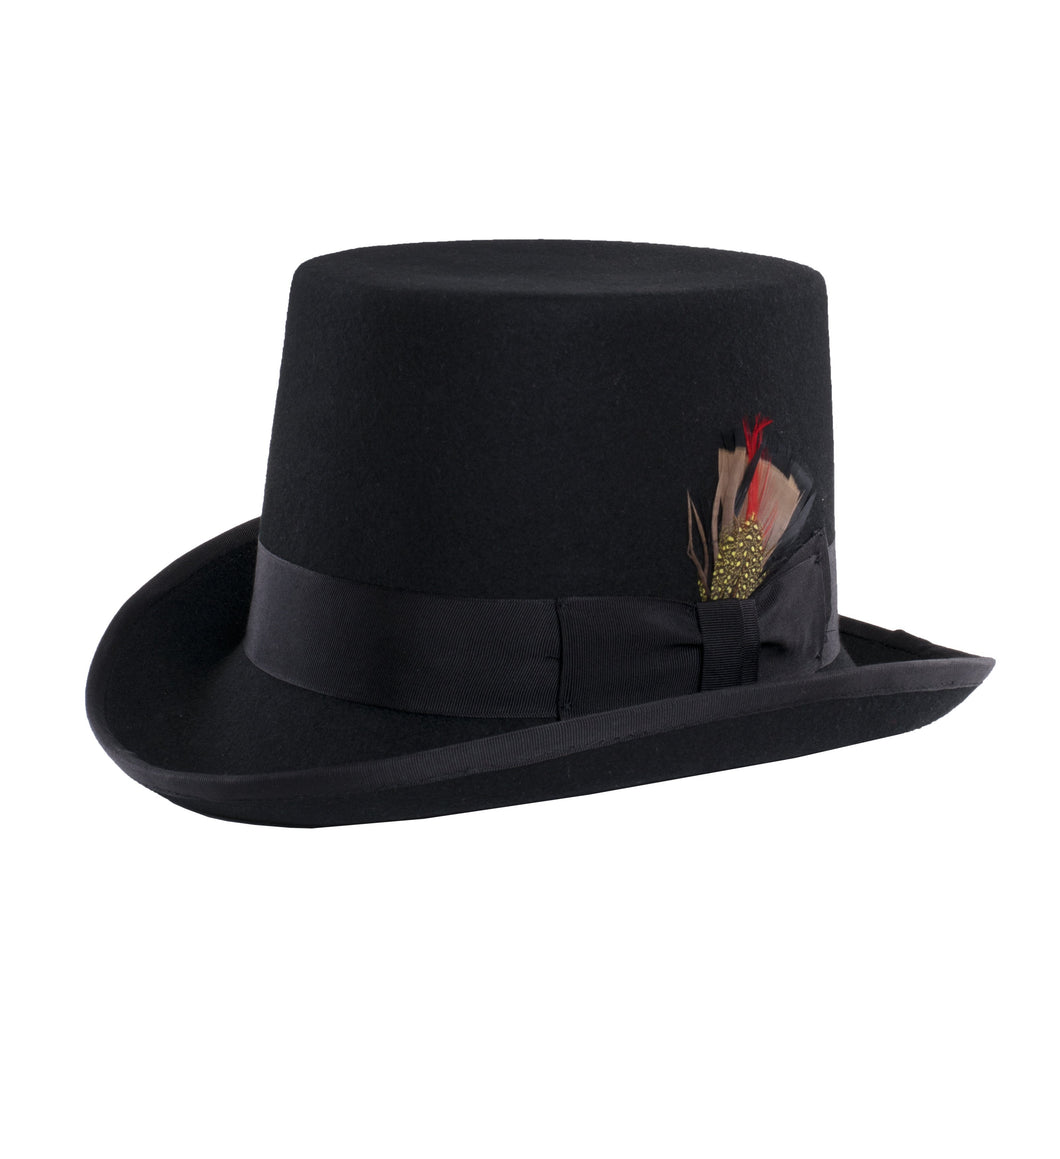 Ferrecci Black Short Pilgrim Top Hat 100% Wool Fully Lined inside, Black - Ferrecci USA 